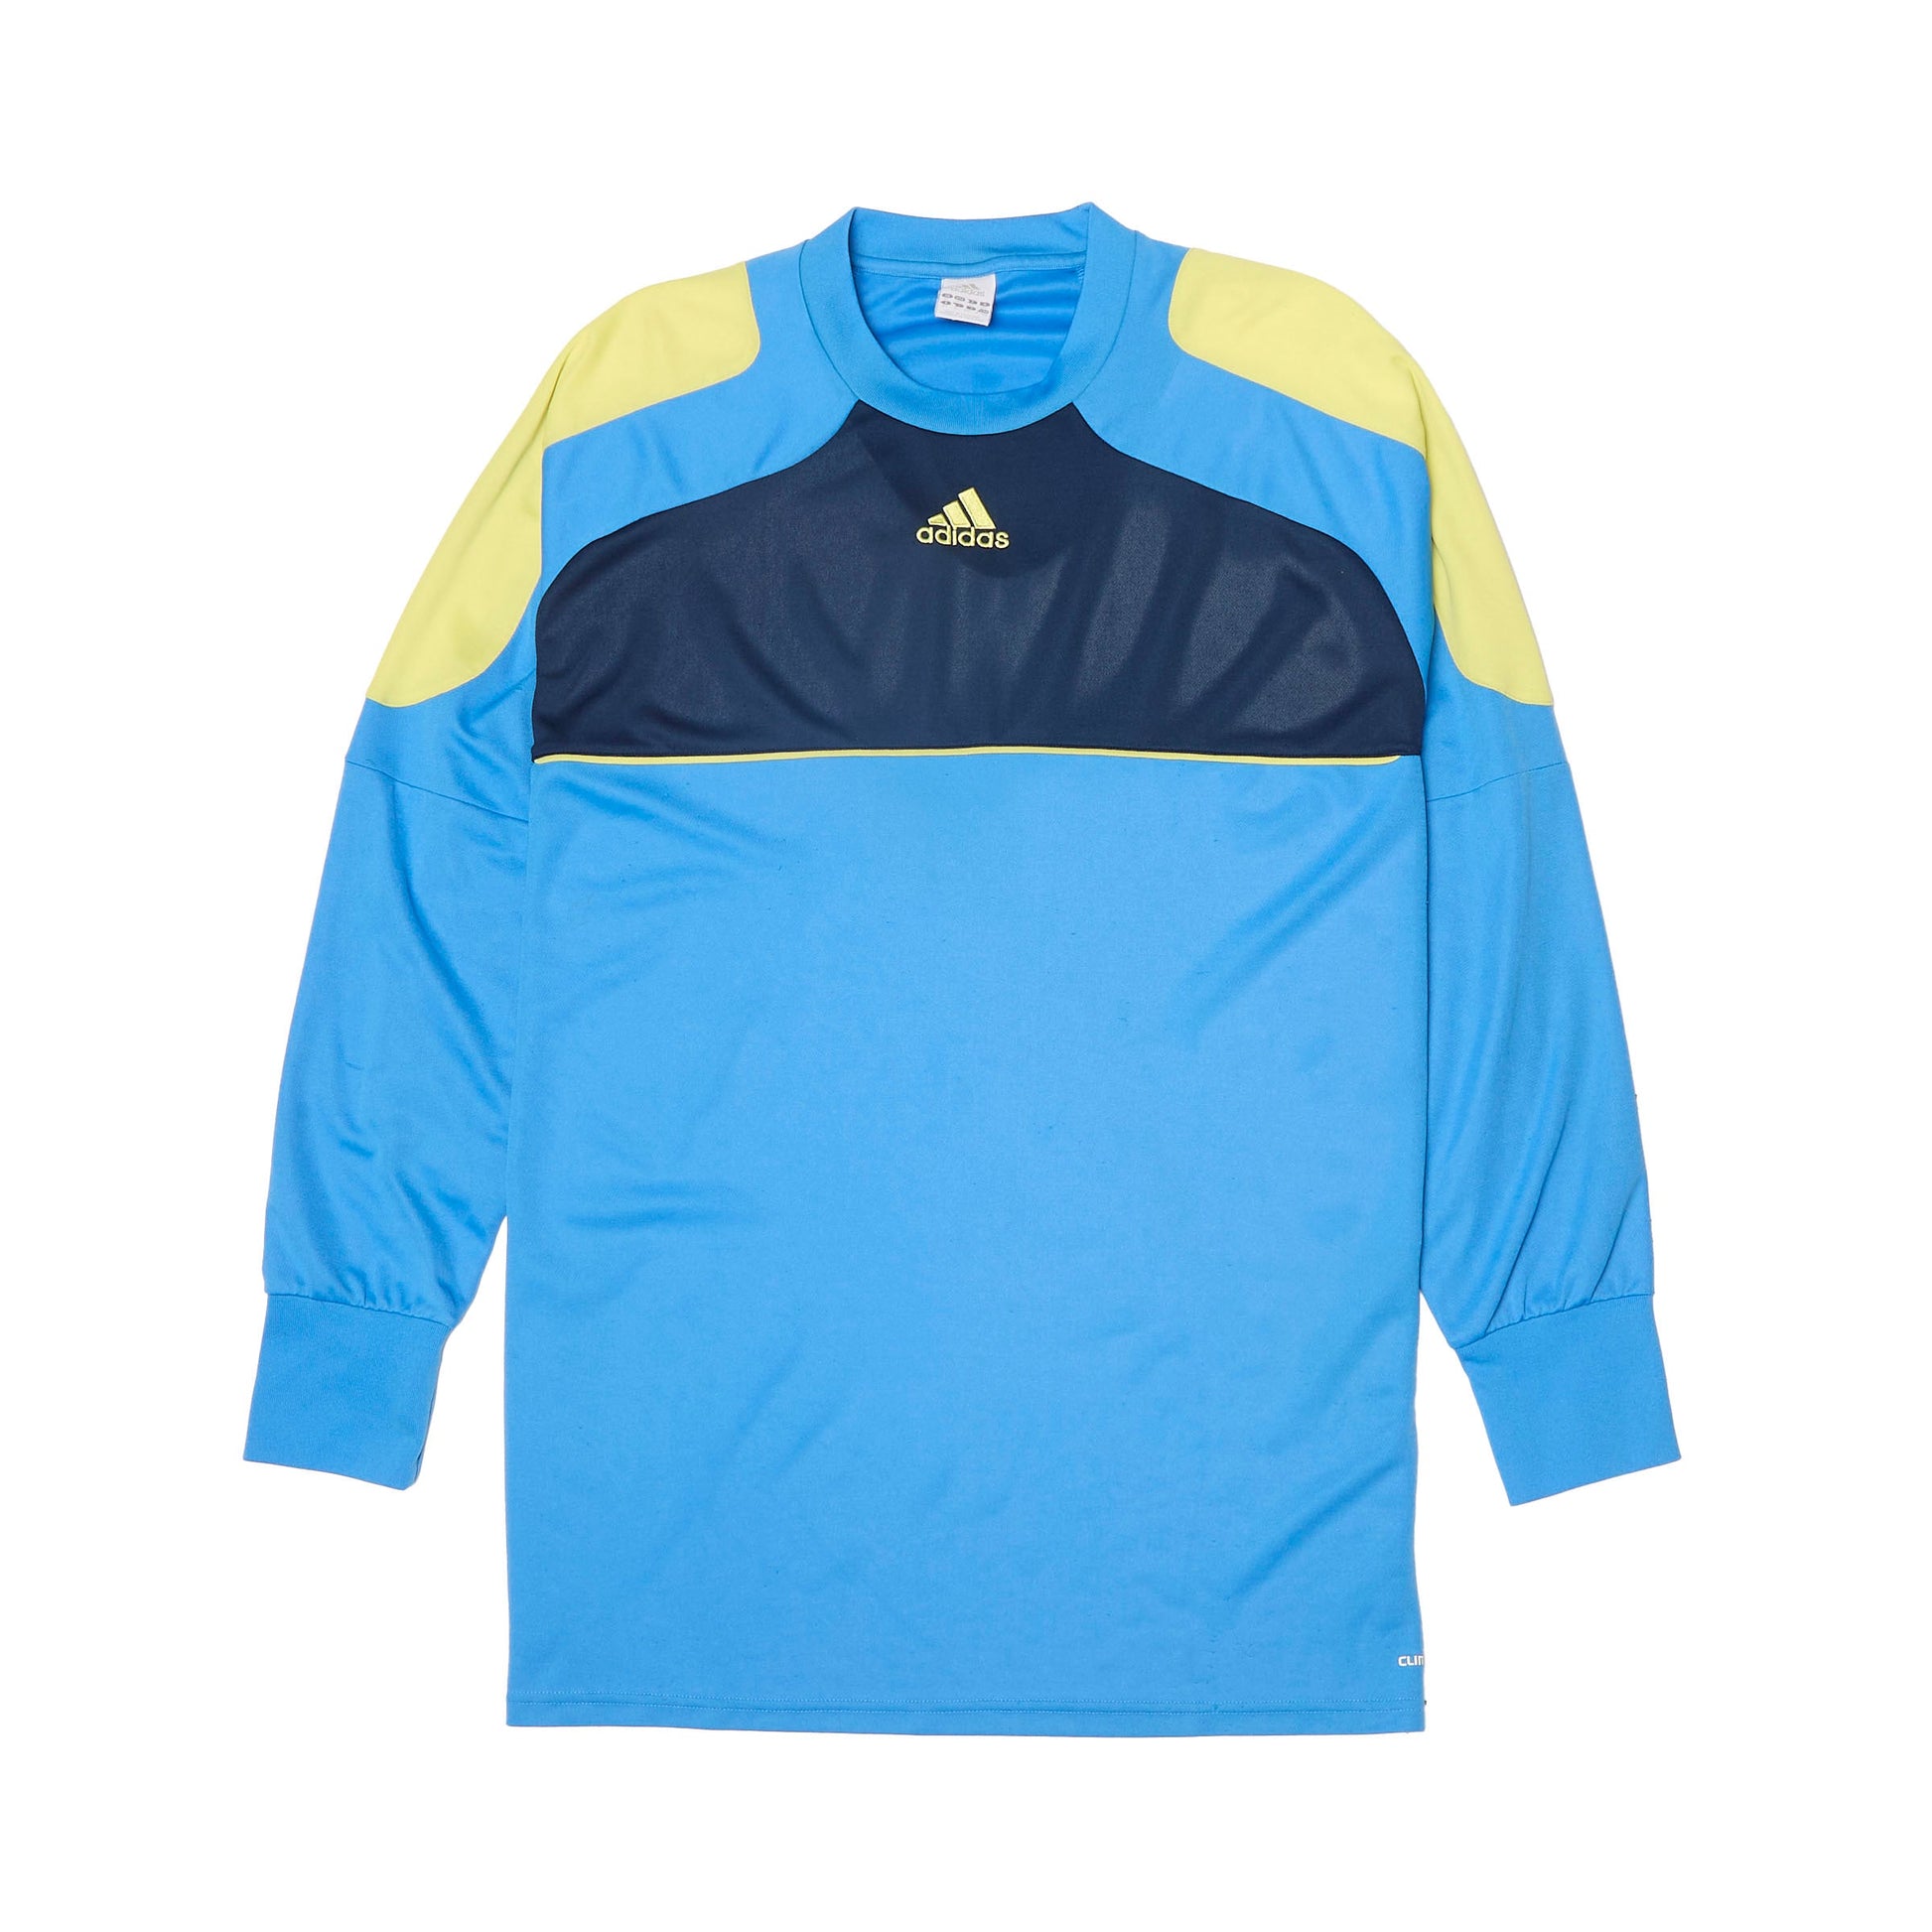 Adidas Embroided Logo Longsleeve Sports Shirt - XL